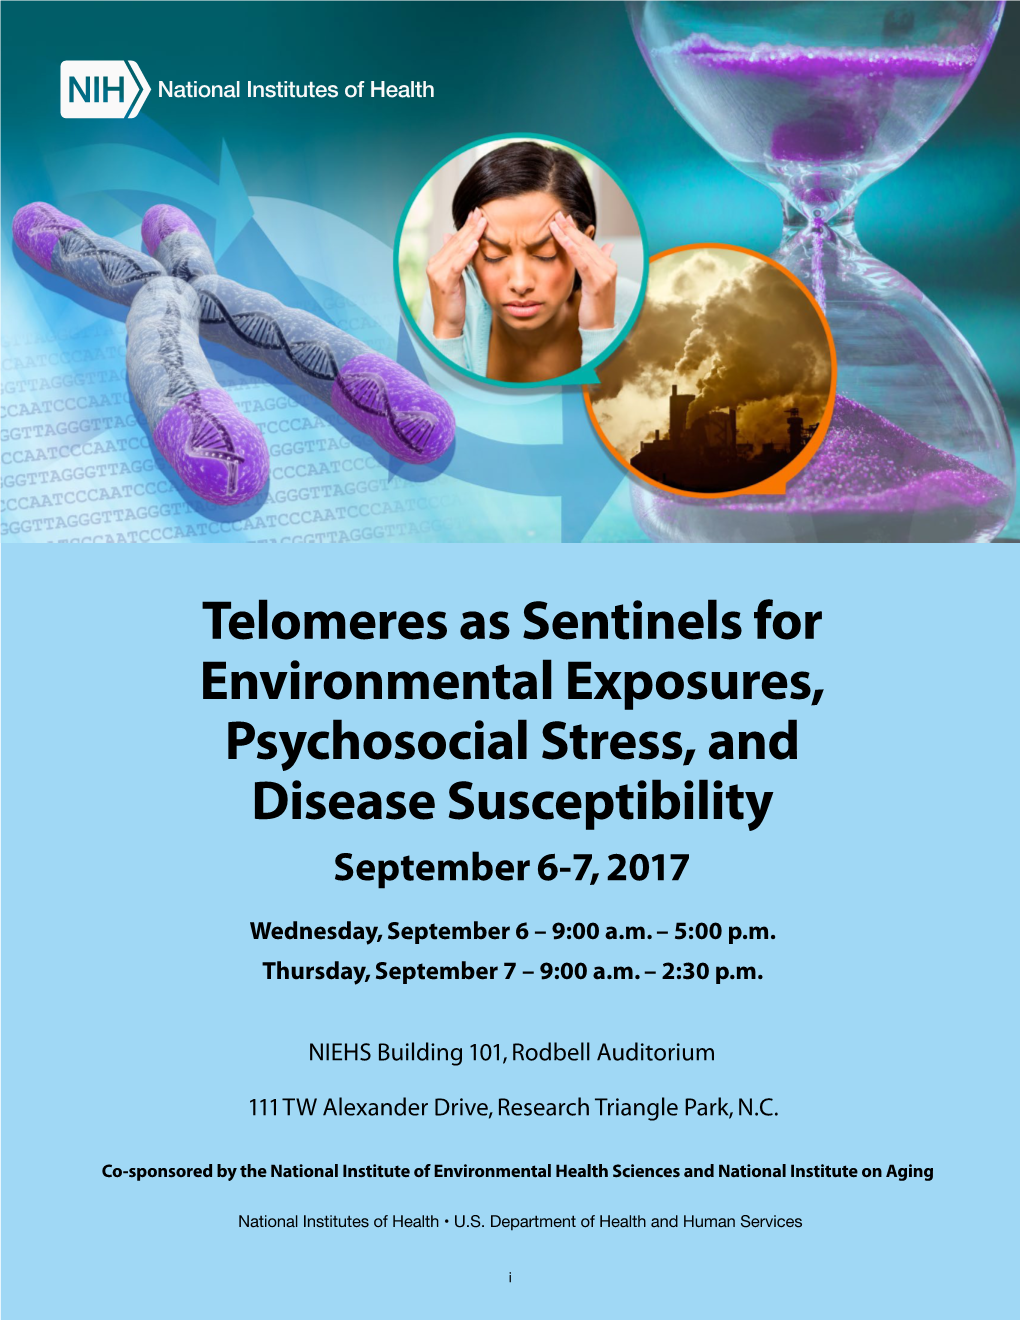 Meeting Book for Telomeres As Sentinels Workshop